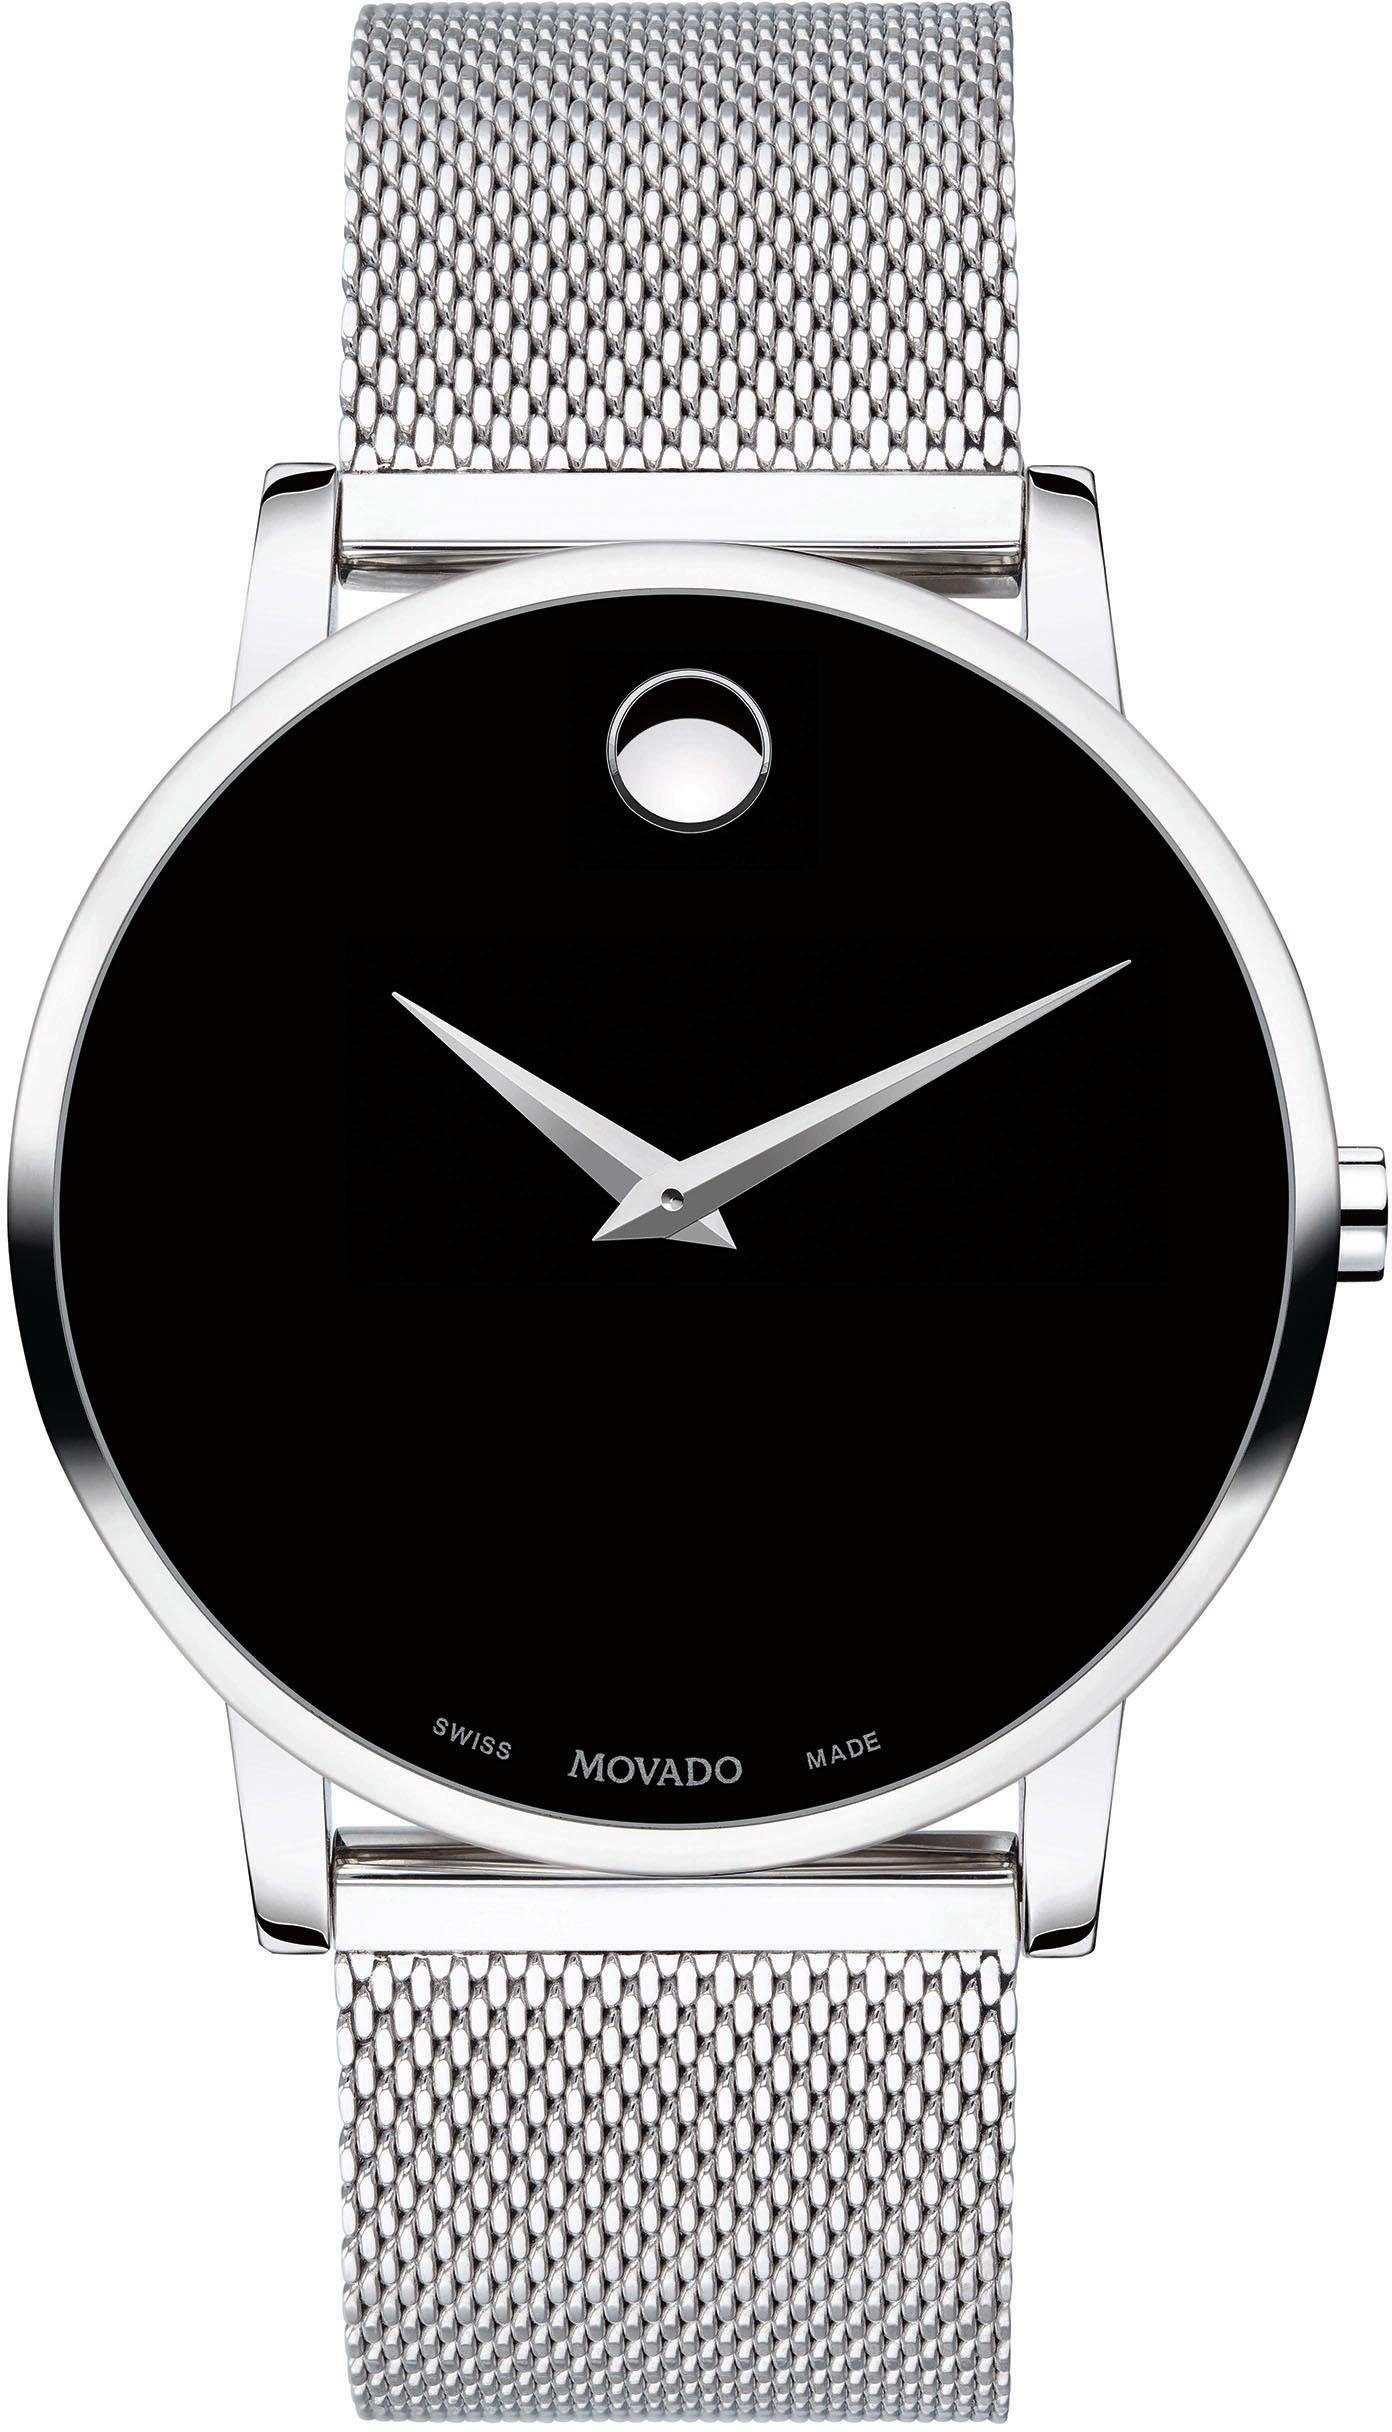 MOVADO Schweizer Uhr MUSEUM, 607219, Quarzuhr, Armbanduhr, Herrenuhr, Swiss Made, Saphirglas